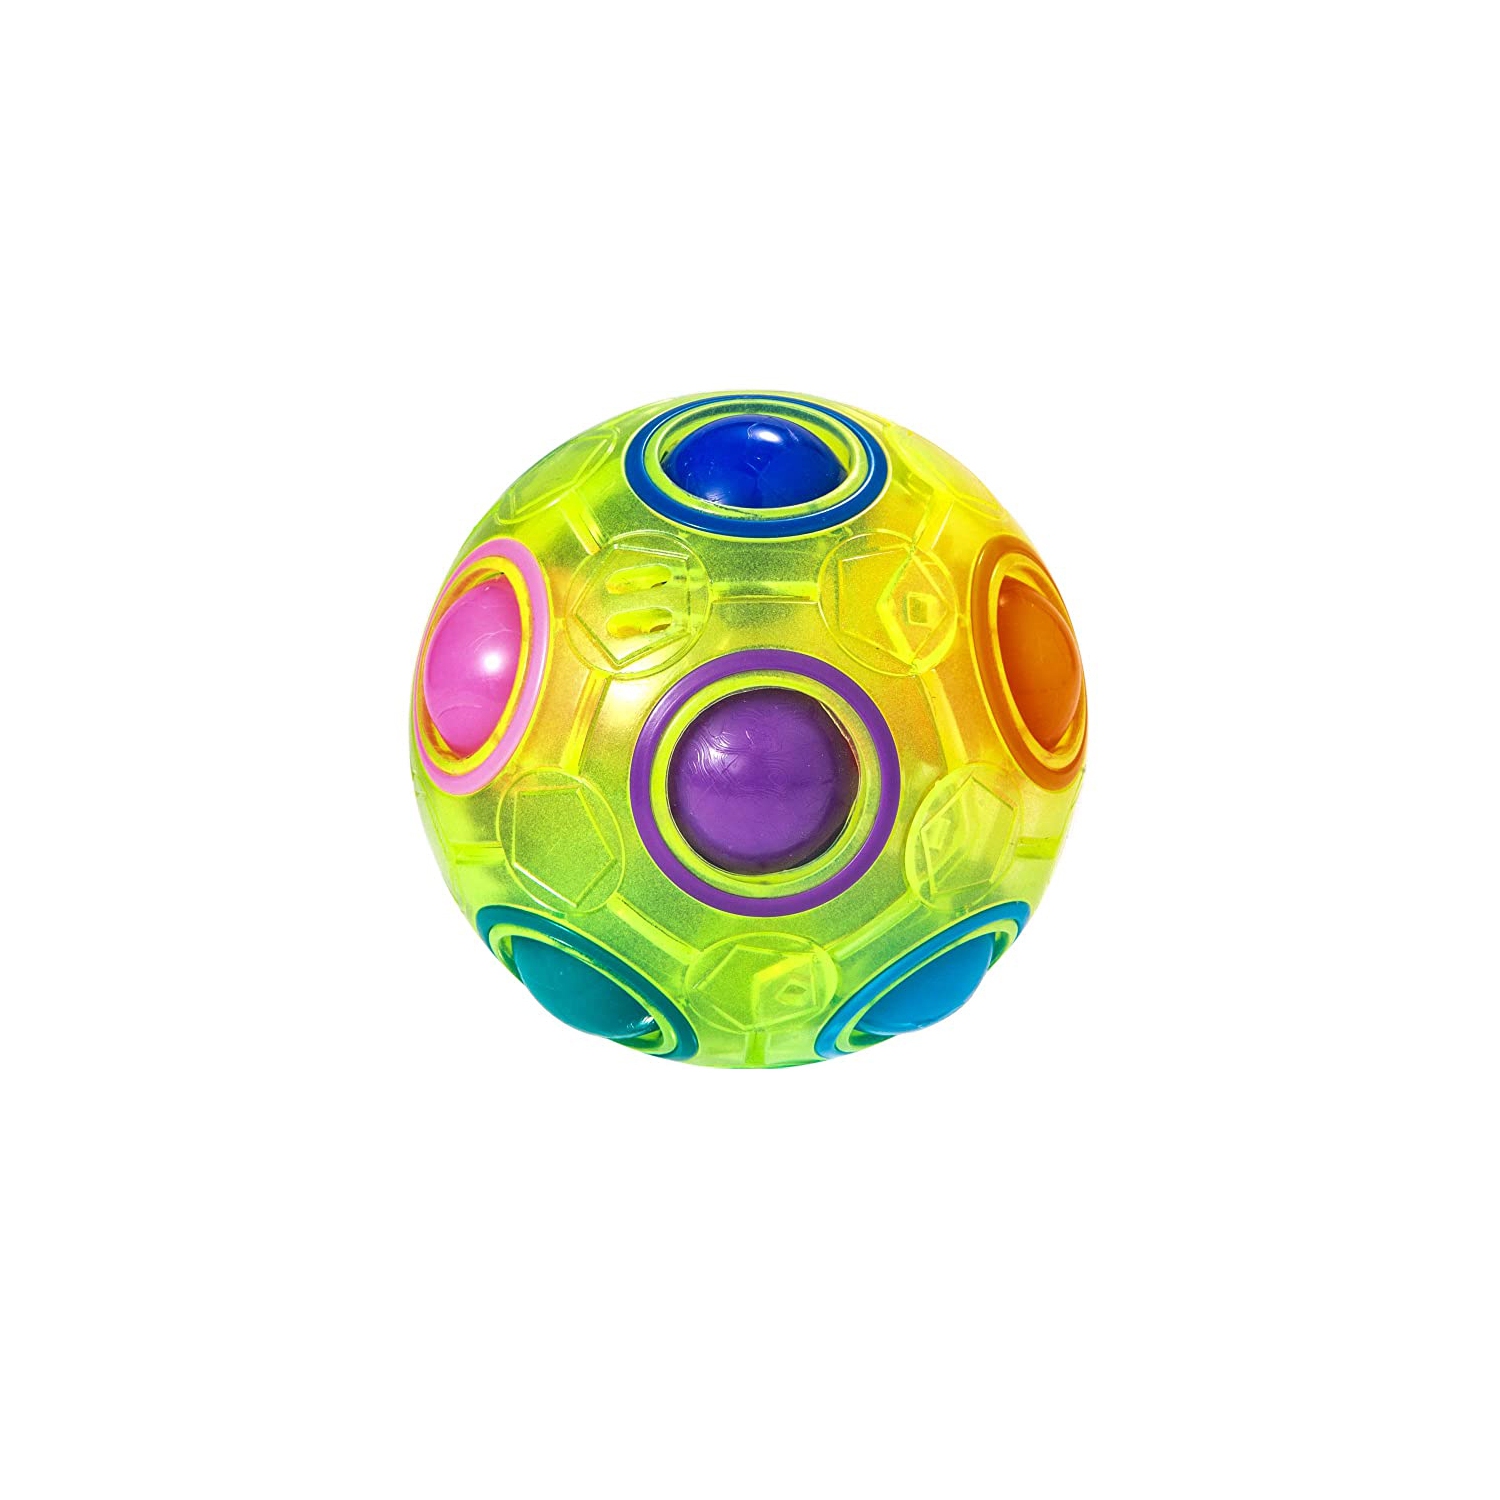 Magic Rainbow Puzzle Ball Pop Fidget Toy Stress Reliever - Green